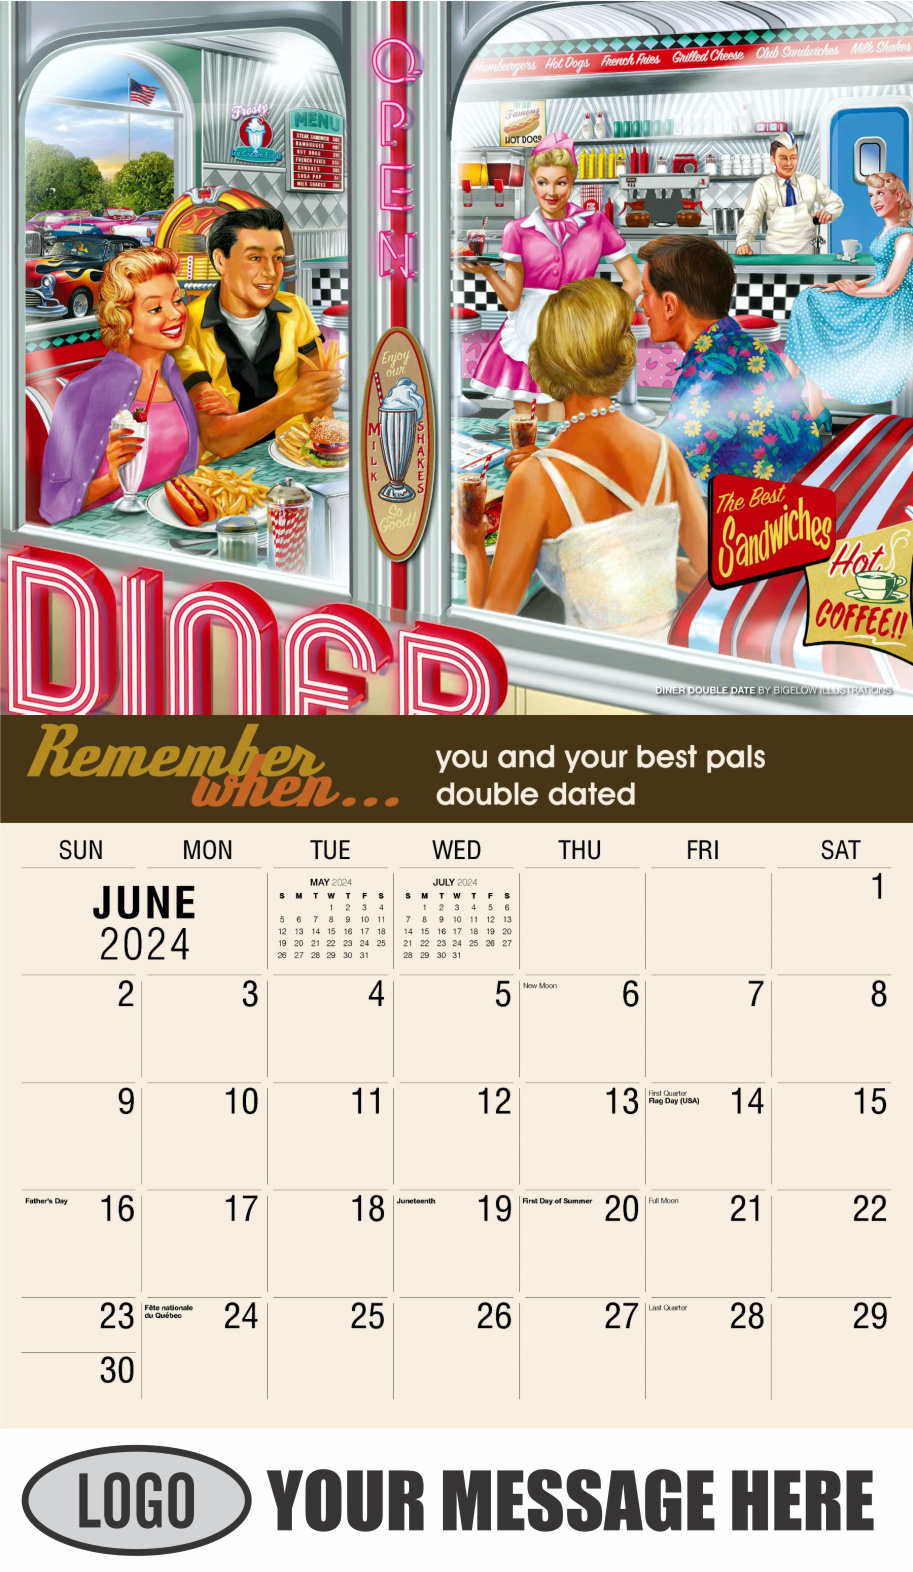 Remember When 2024 Business Advertising Calendar - June